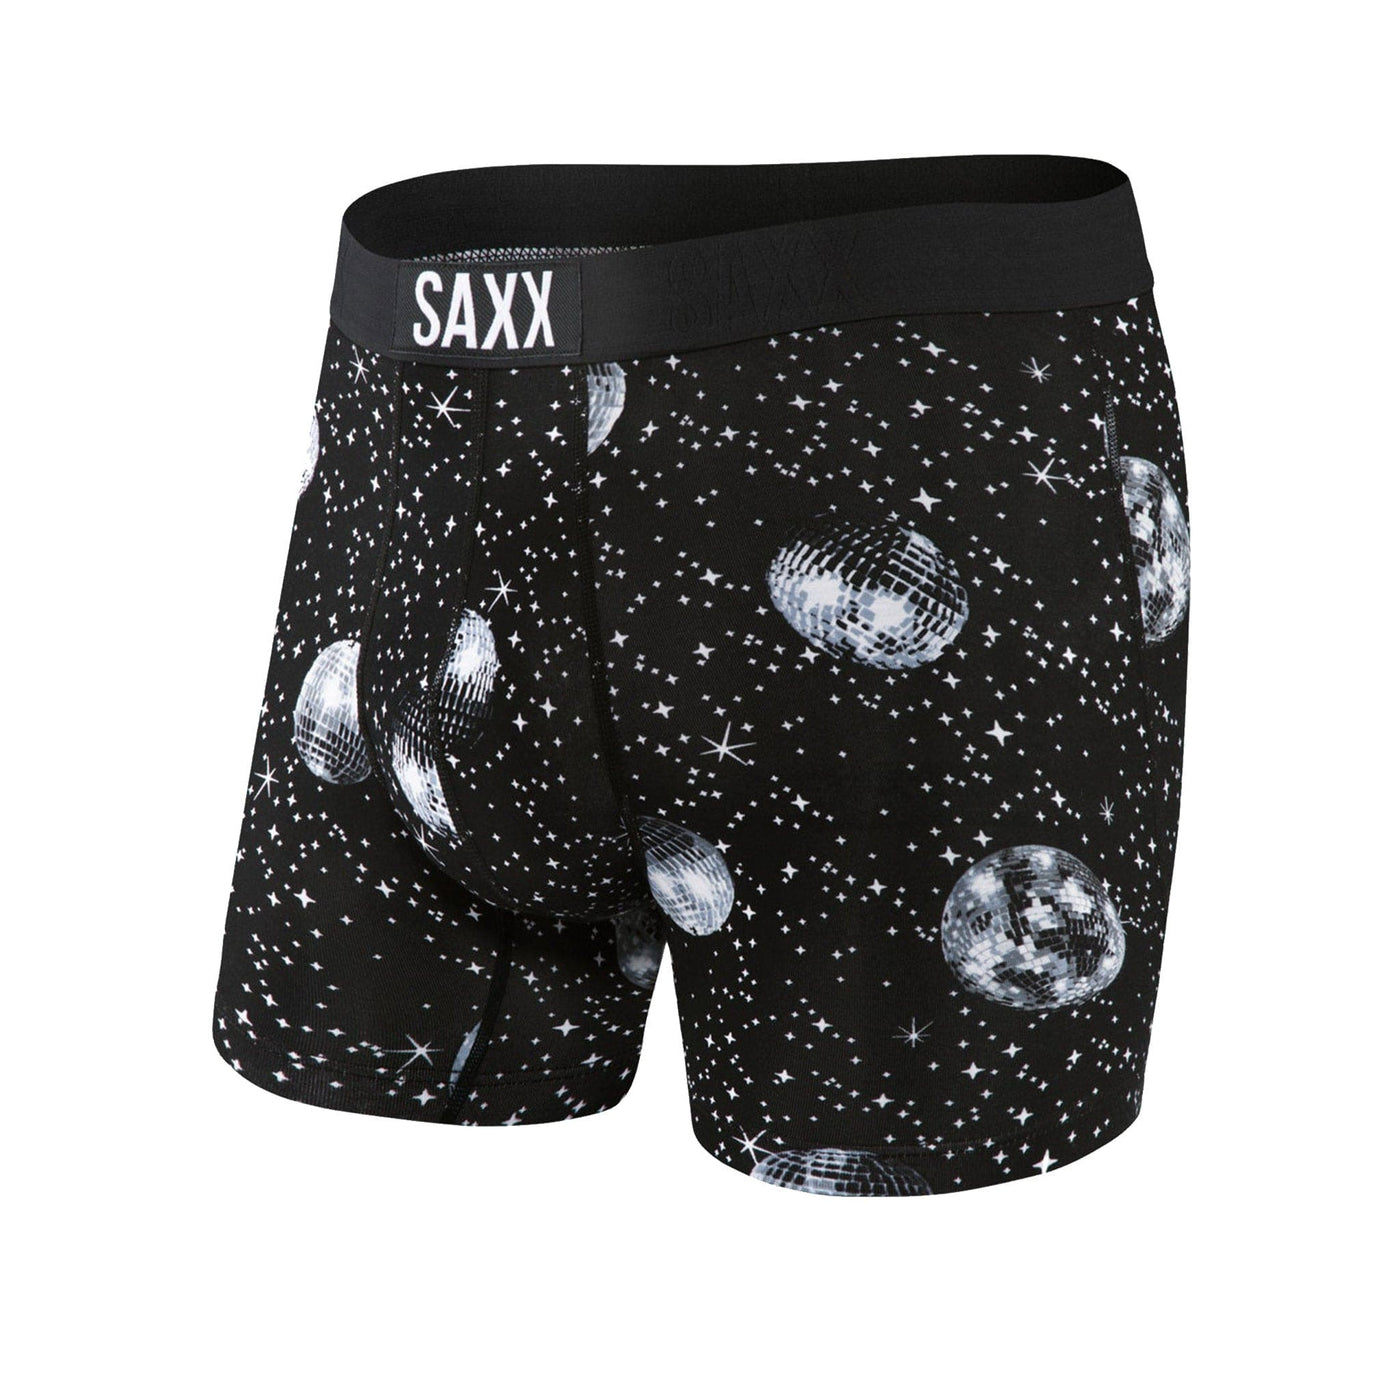 Saxx Vibe Boxers - Black Galaxy 54